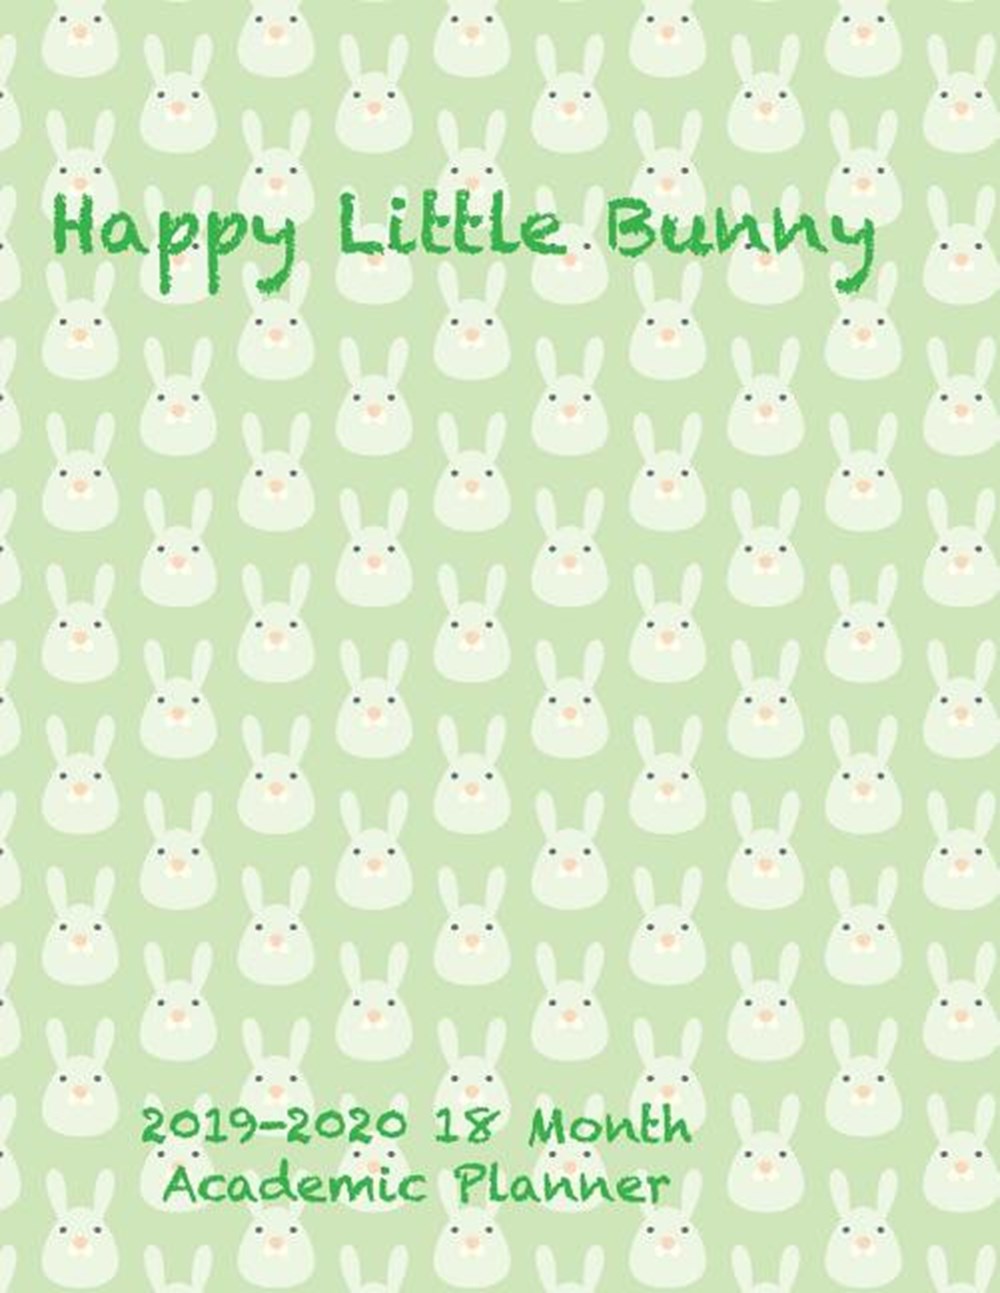 Happy Little Bunny 2019-2020 18 Month Academic Planner July 2019 To December 2020 Calendar Schedule 